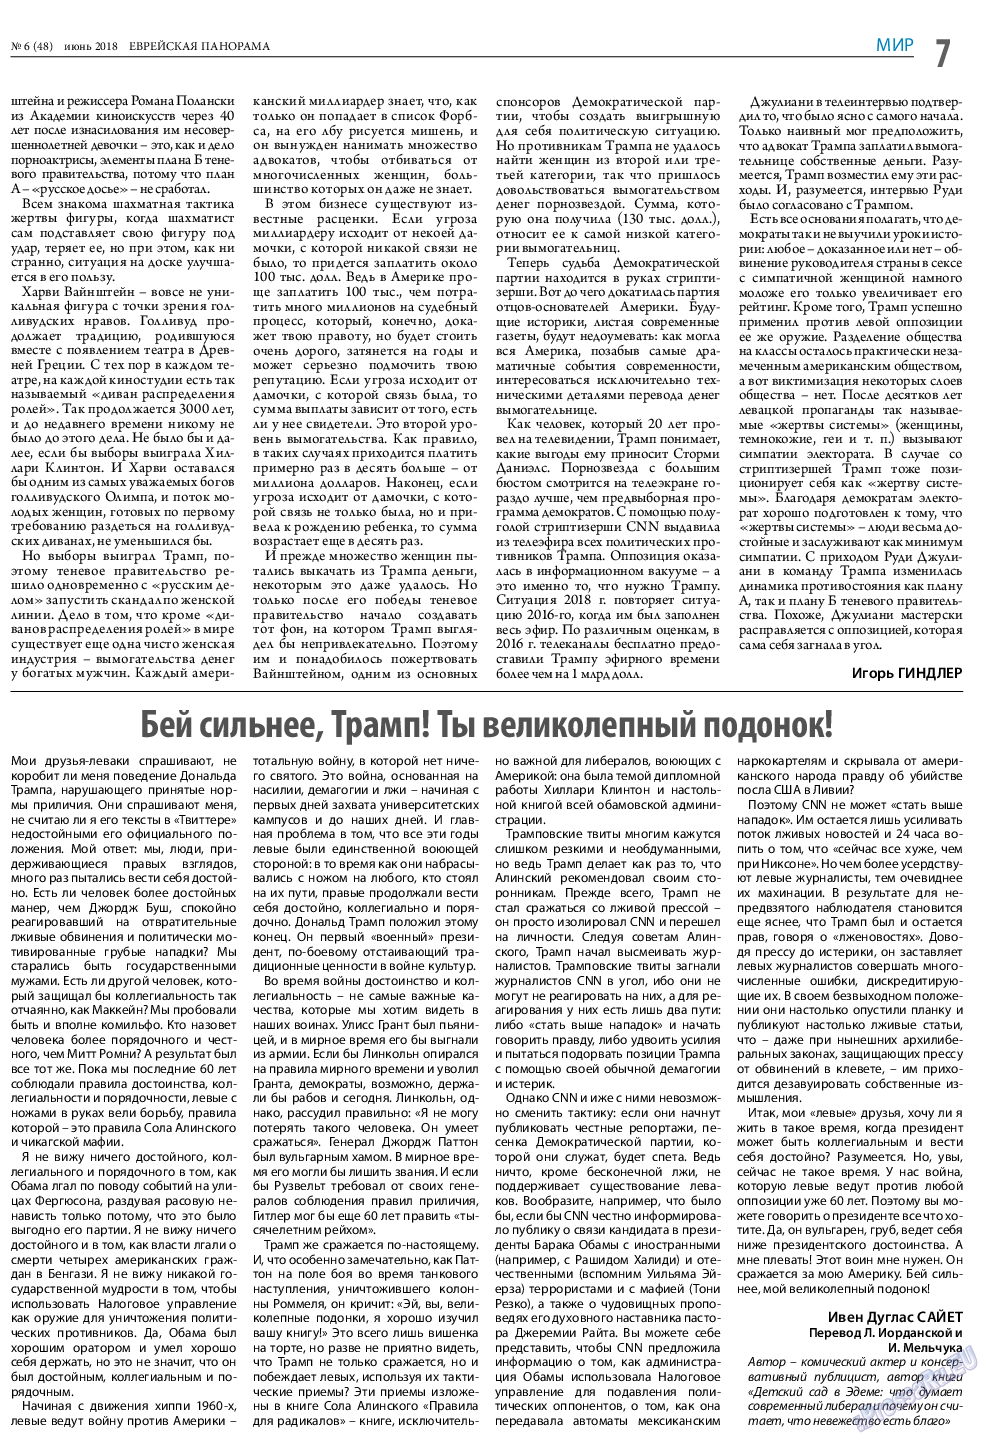 Еврейская панорама, газета. 2018 №6 стр.7